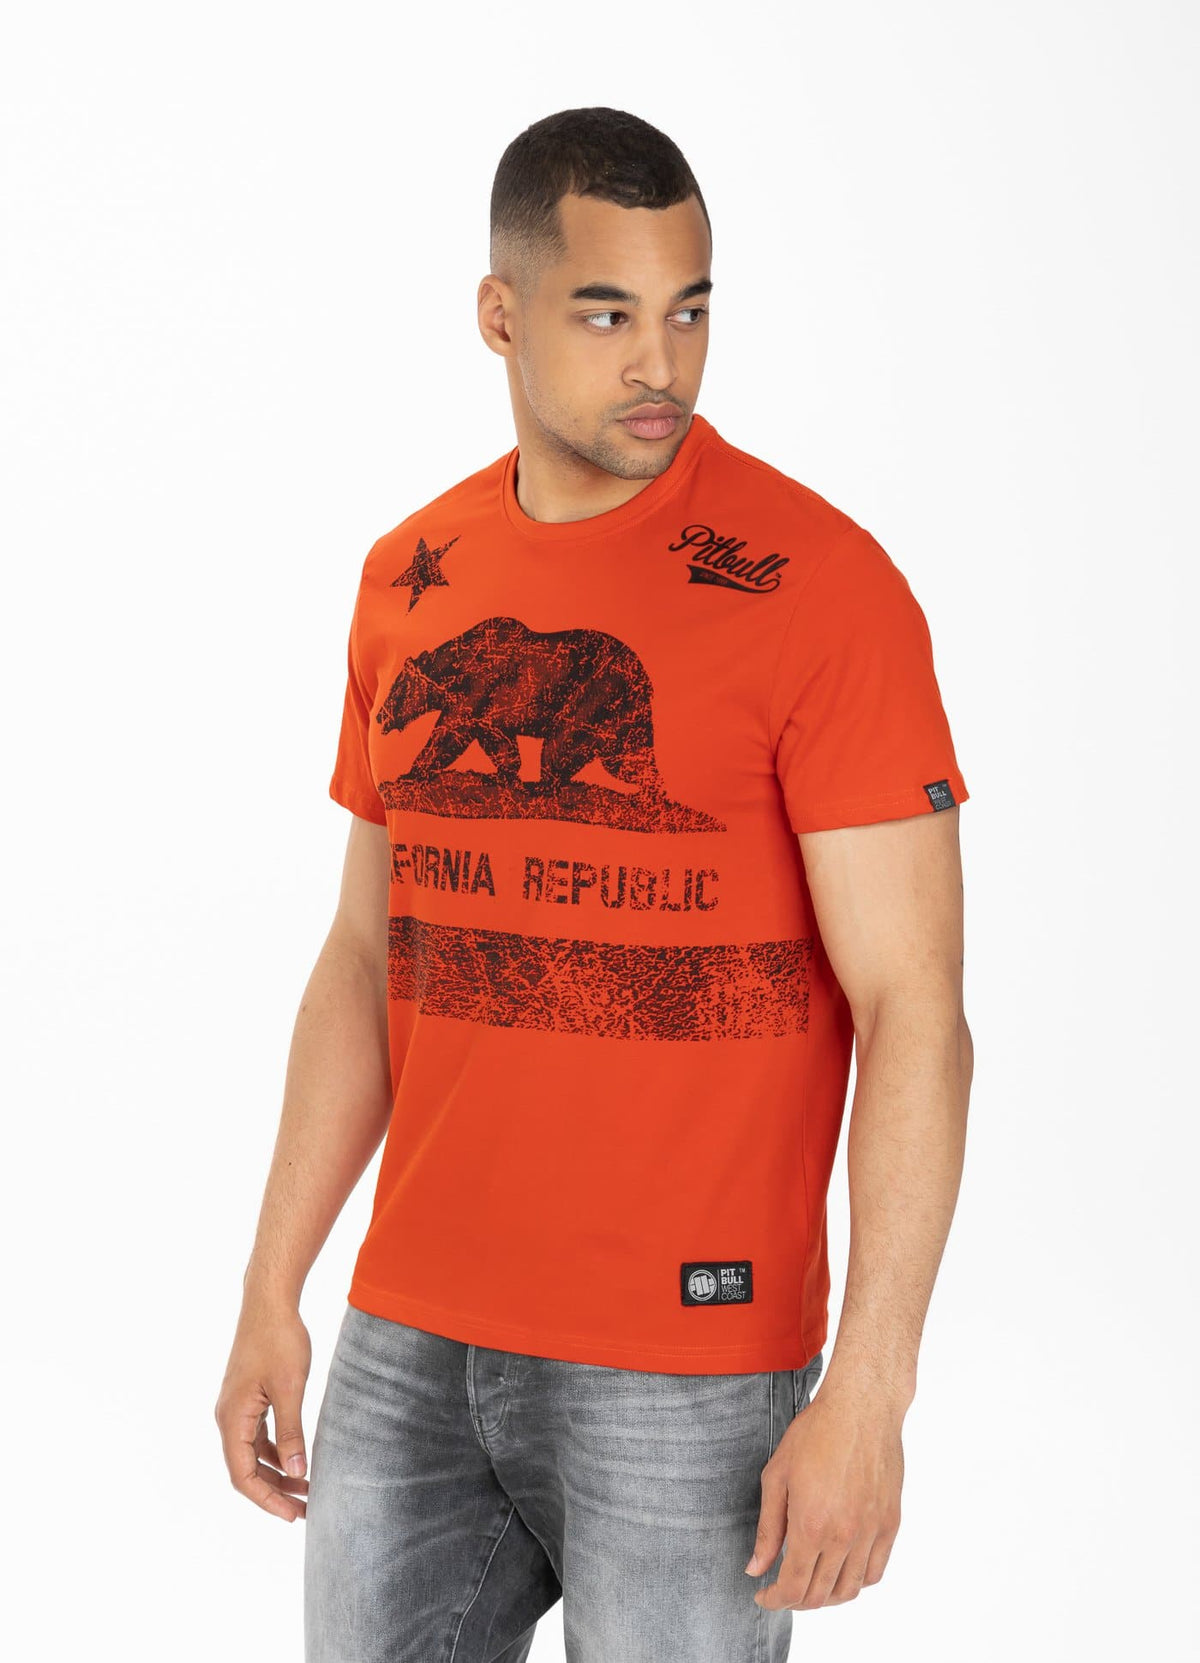 T-shirt CALIFORNIA Orange Red - Pitbull West Coast International Store 